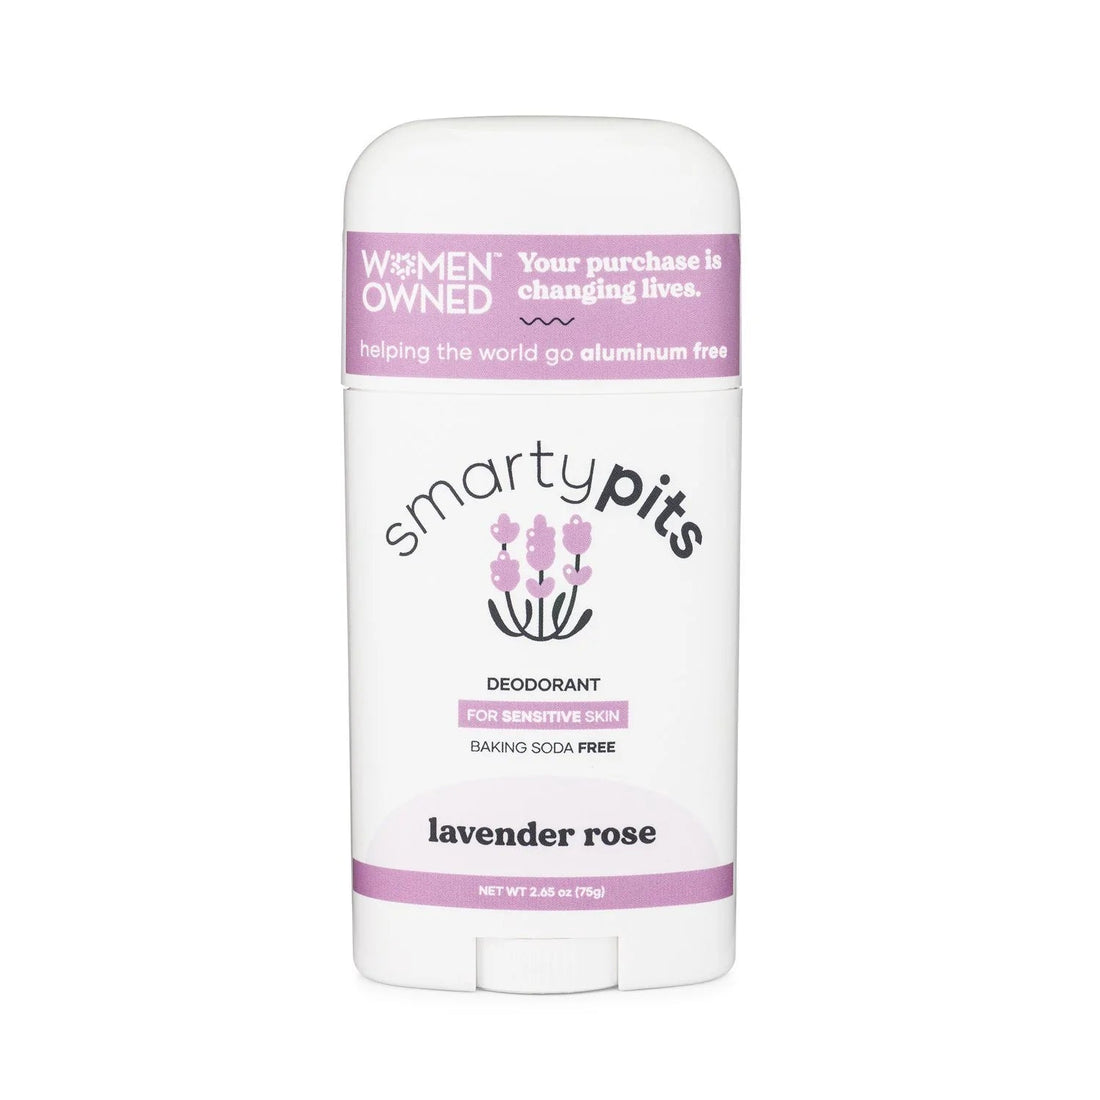 Natural Deodorant | No Aluminum & Banking Soda Free - 3 Options - 2.65 oz. Deodorant Smarty Pits Lavender Rose 